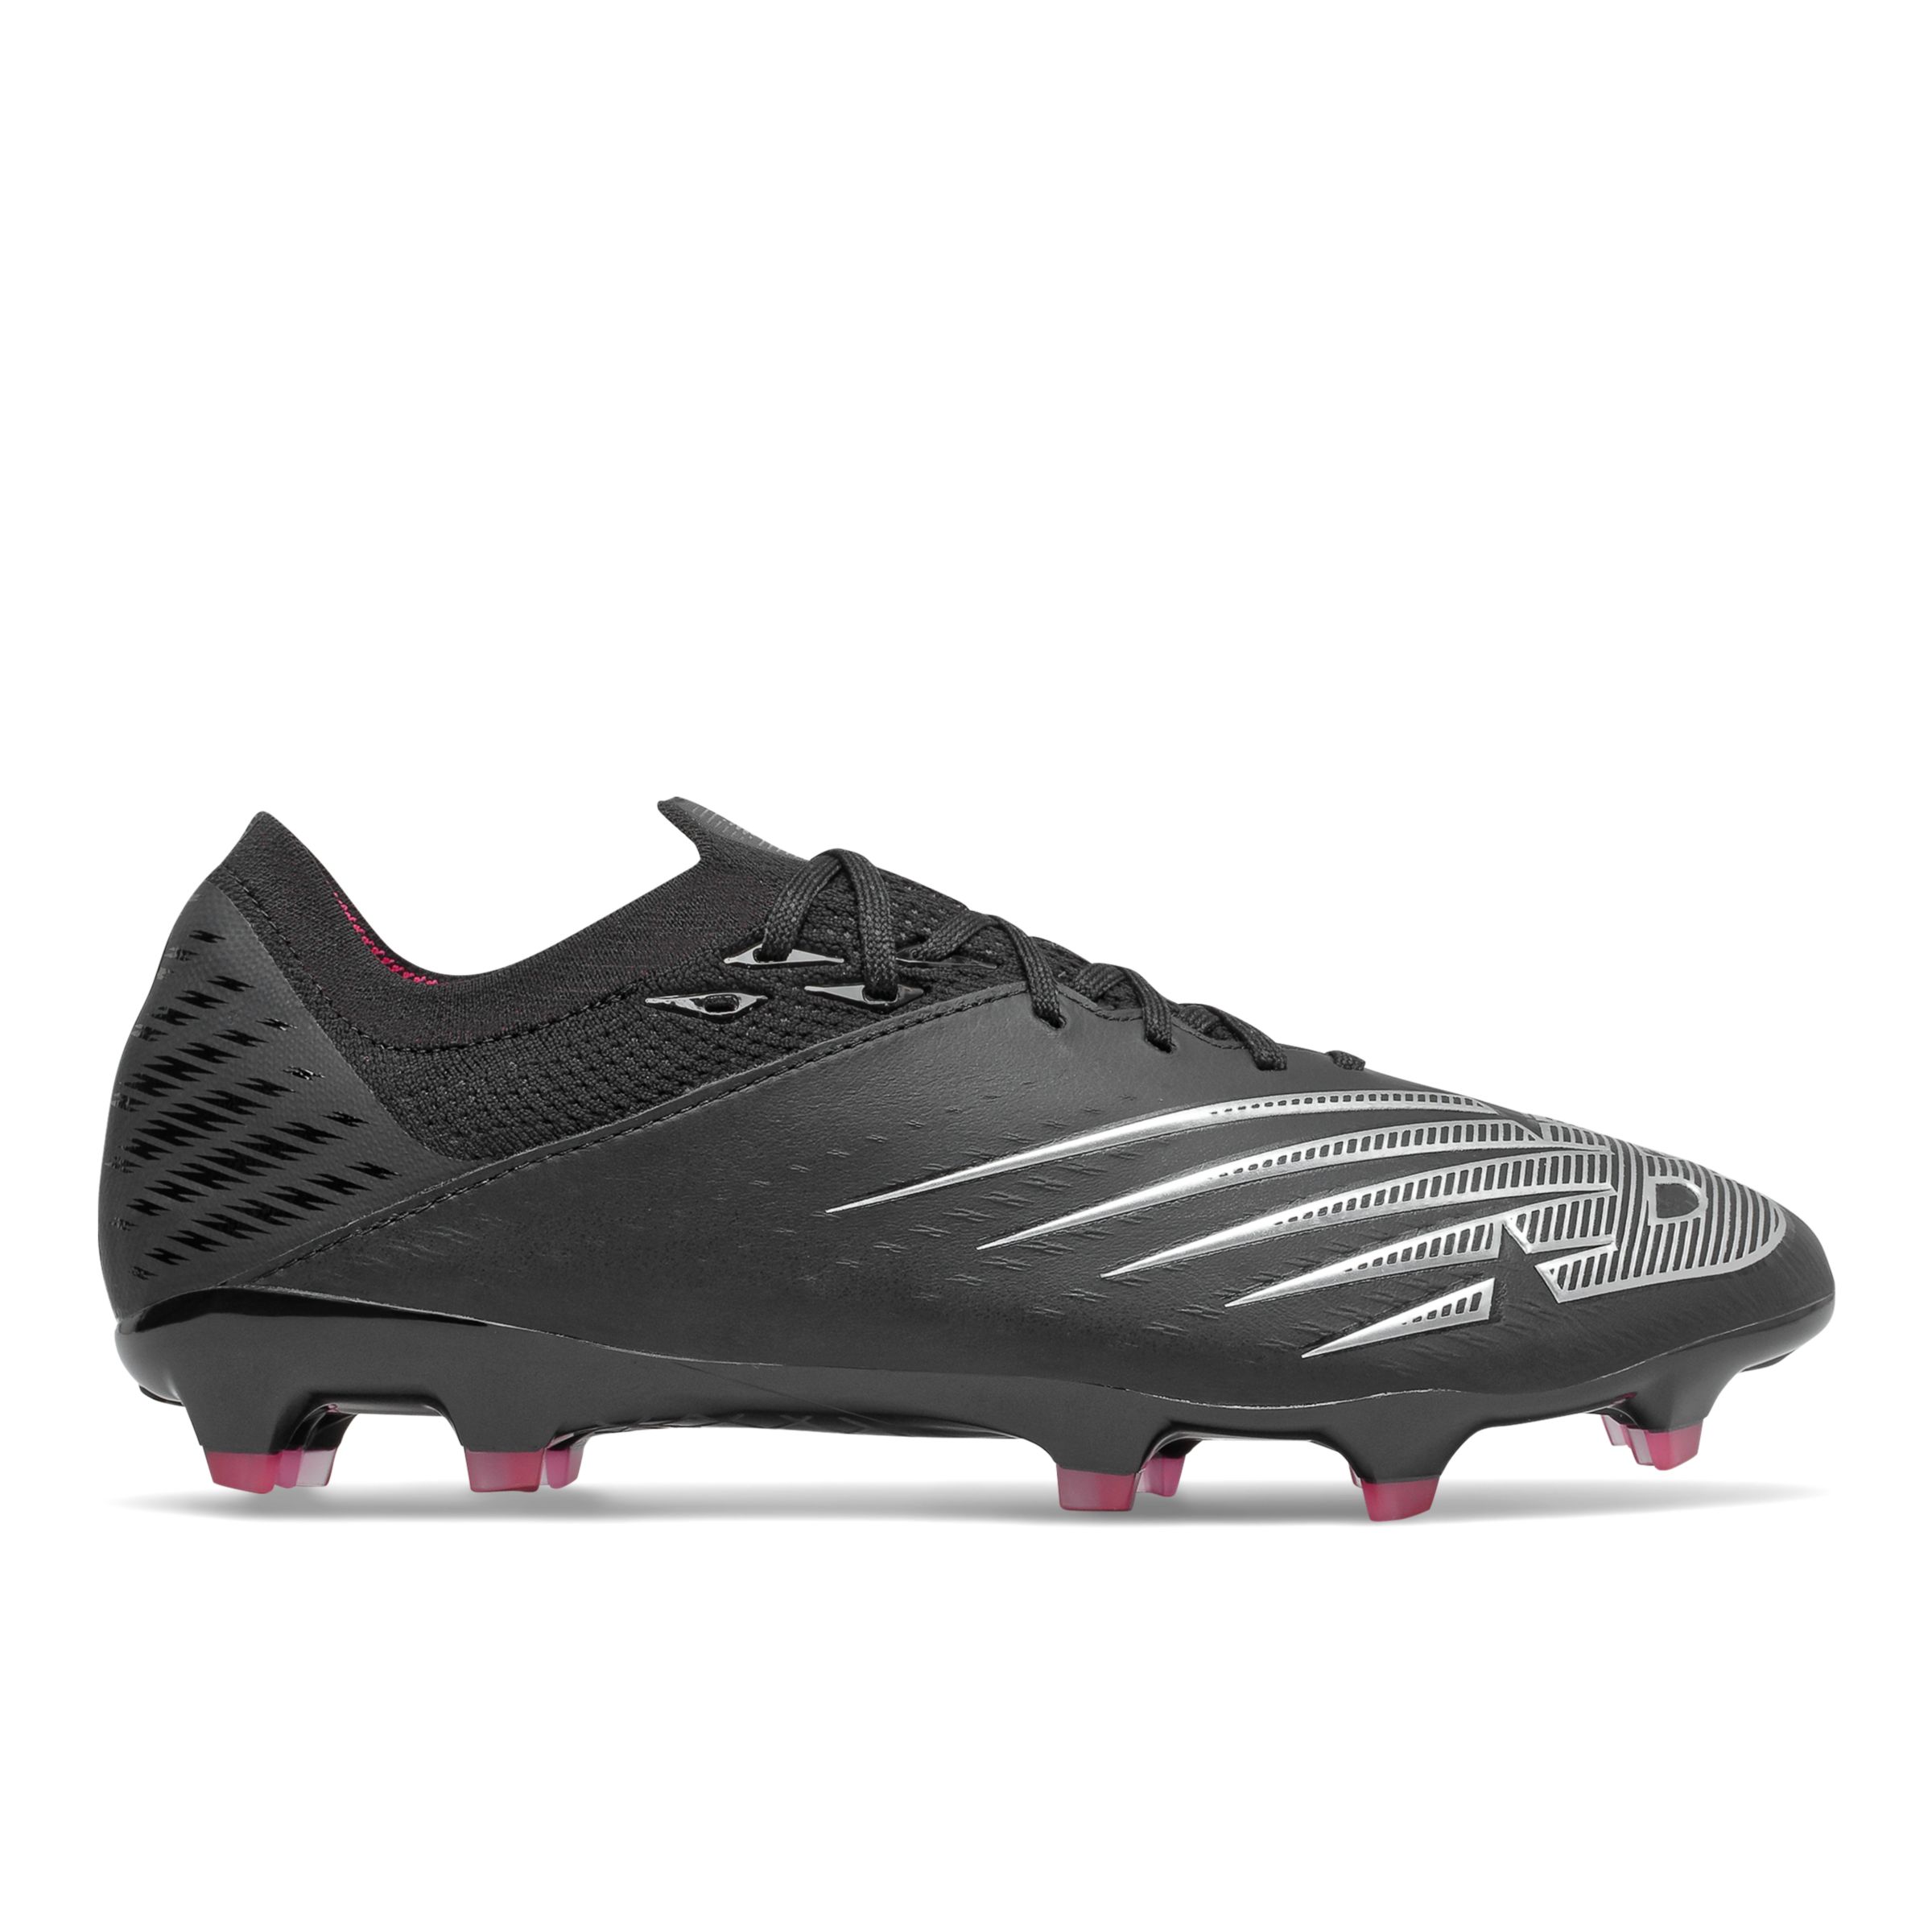 Men's Footwear New Balance Botaas de fútbol Furon V6+ Leather FG - Hombres EU 40.5, Black/Pink